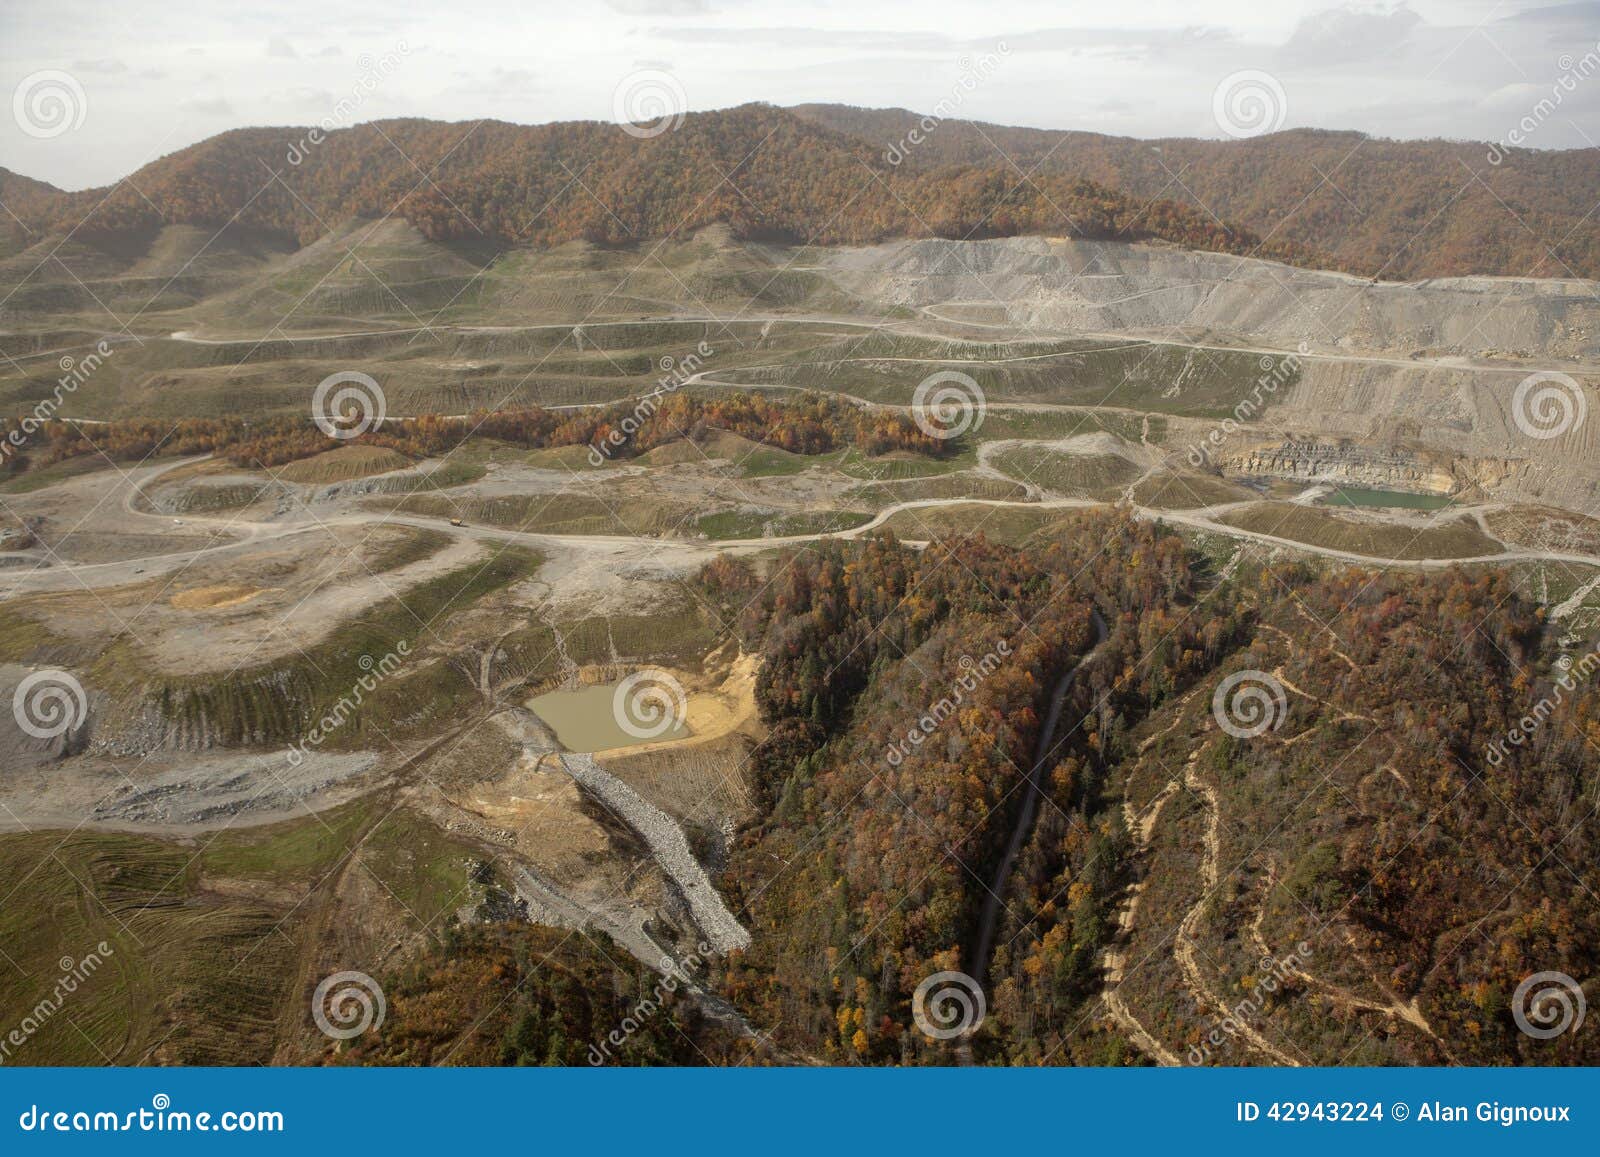 view of coal mine appalachia